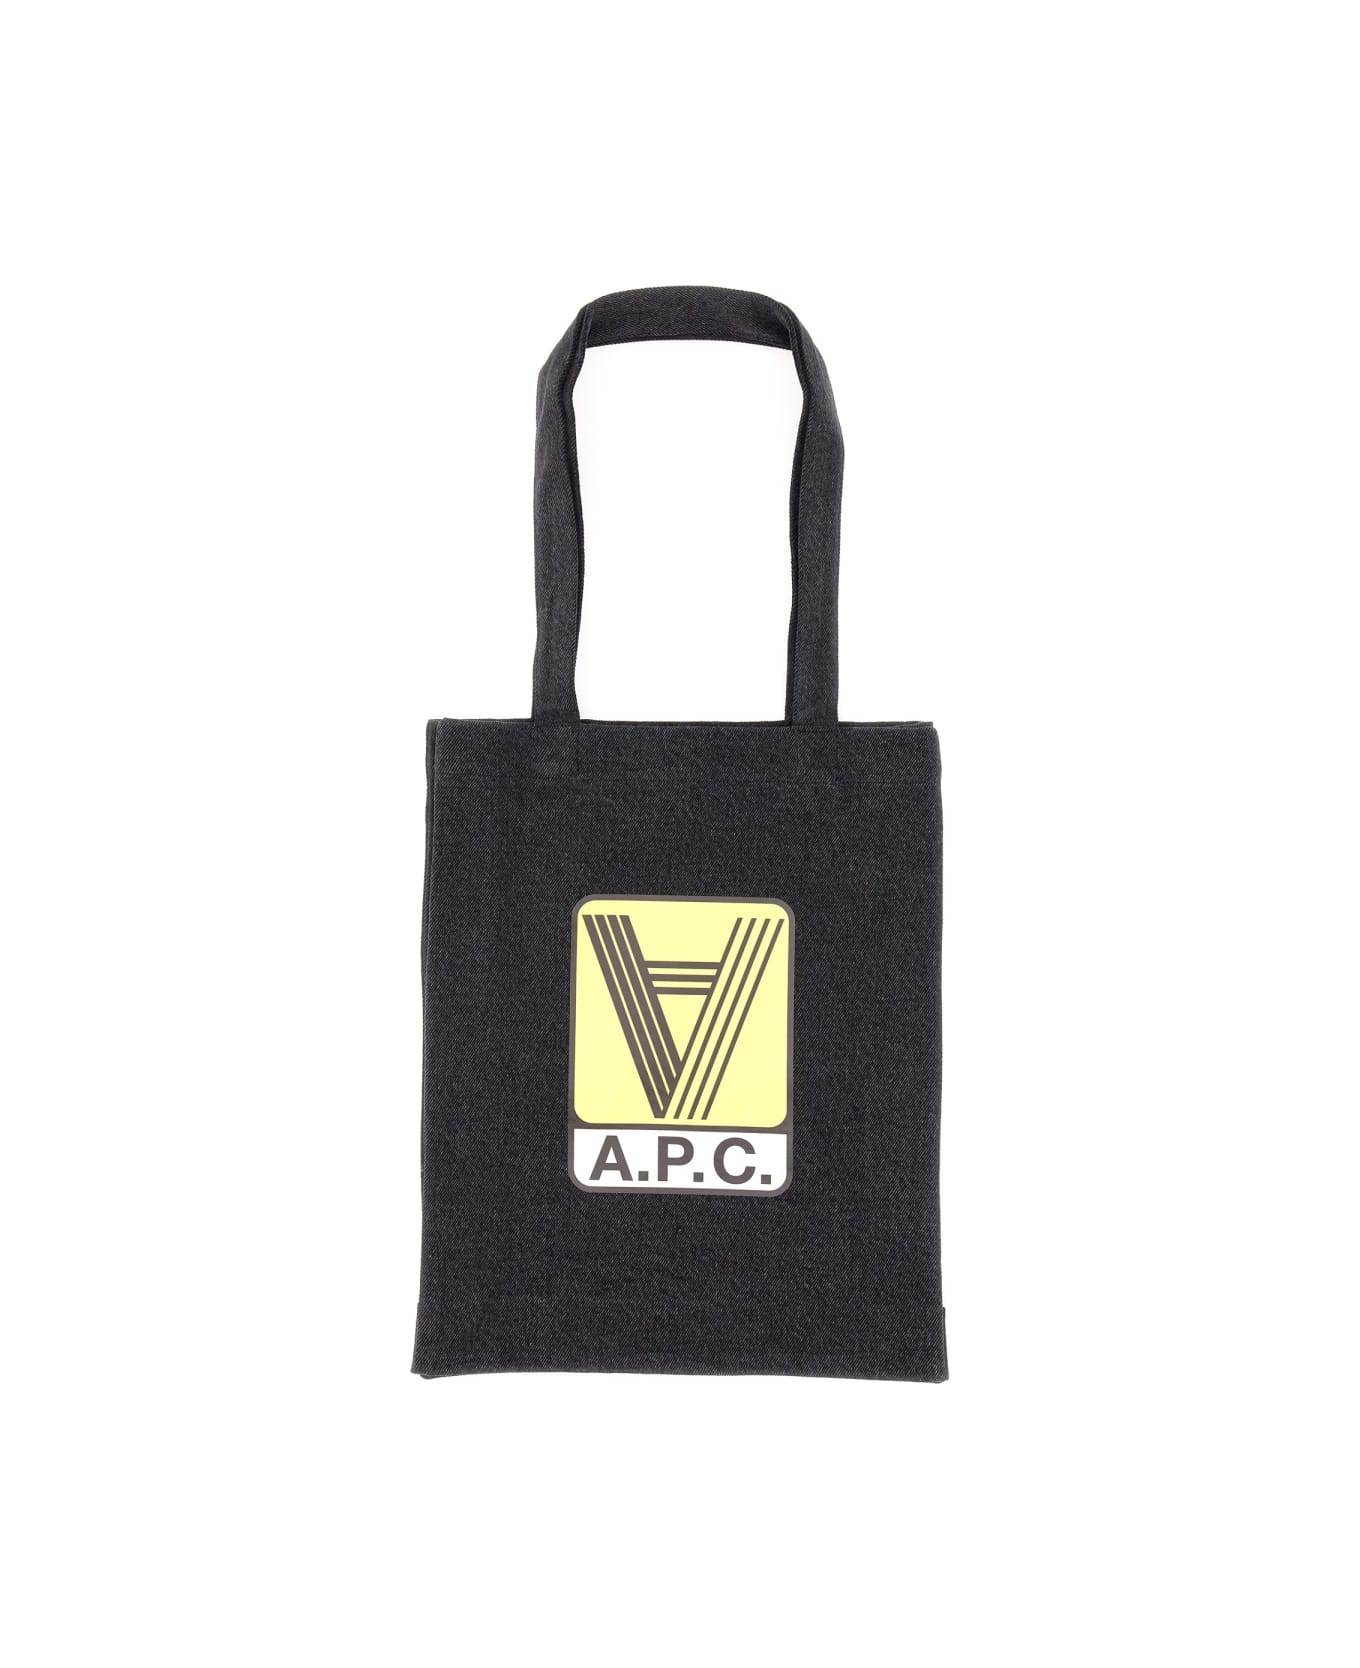 A.P.C. Tote Bag Lou - BLACK